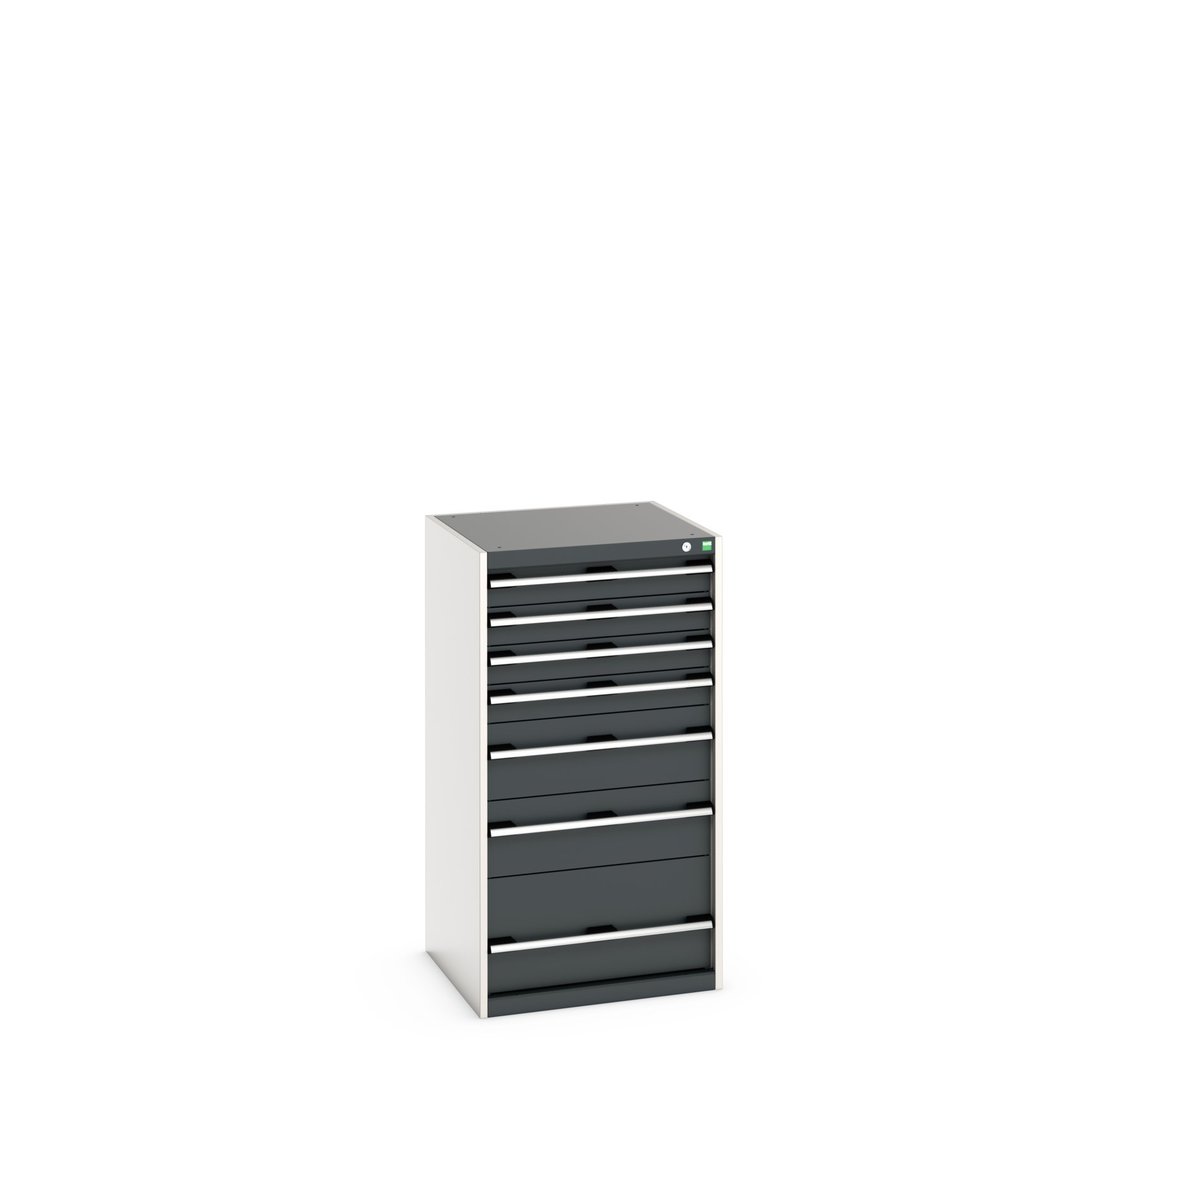 40019069. - cubio drawer cabinet